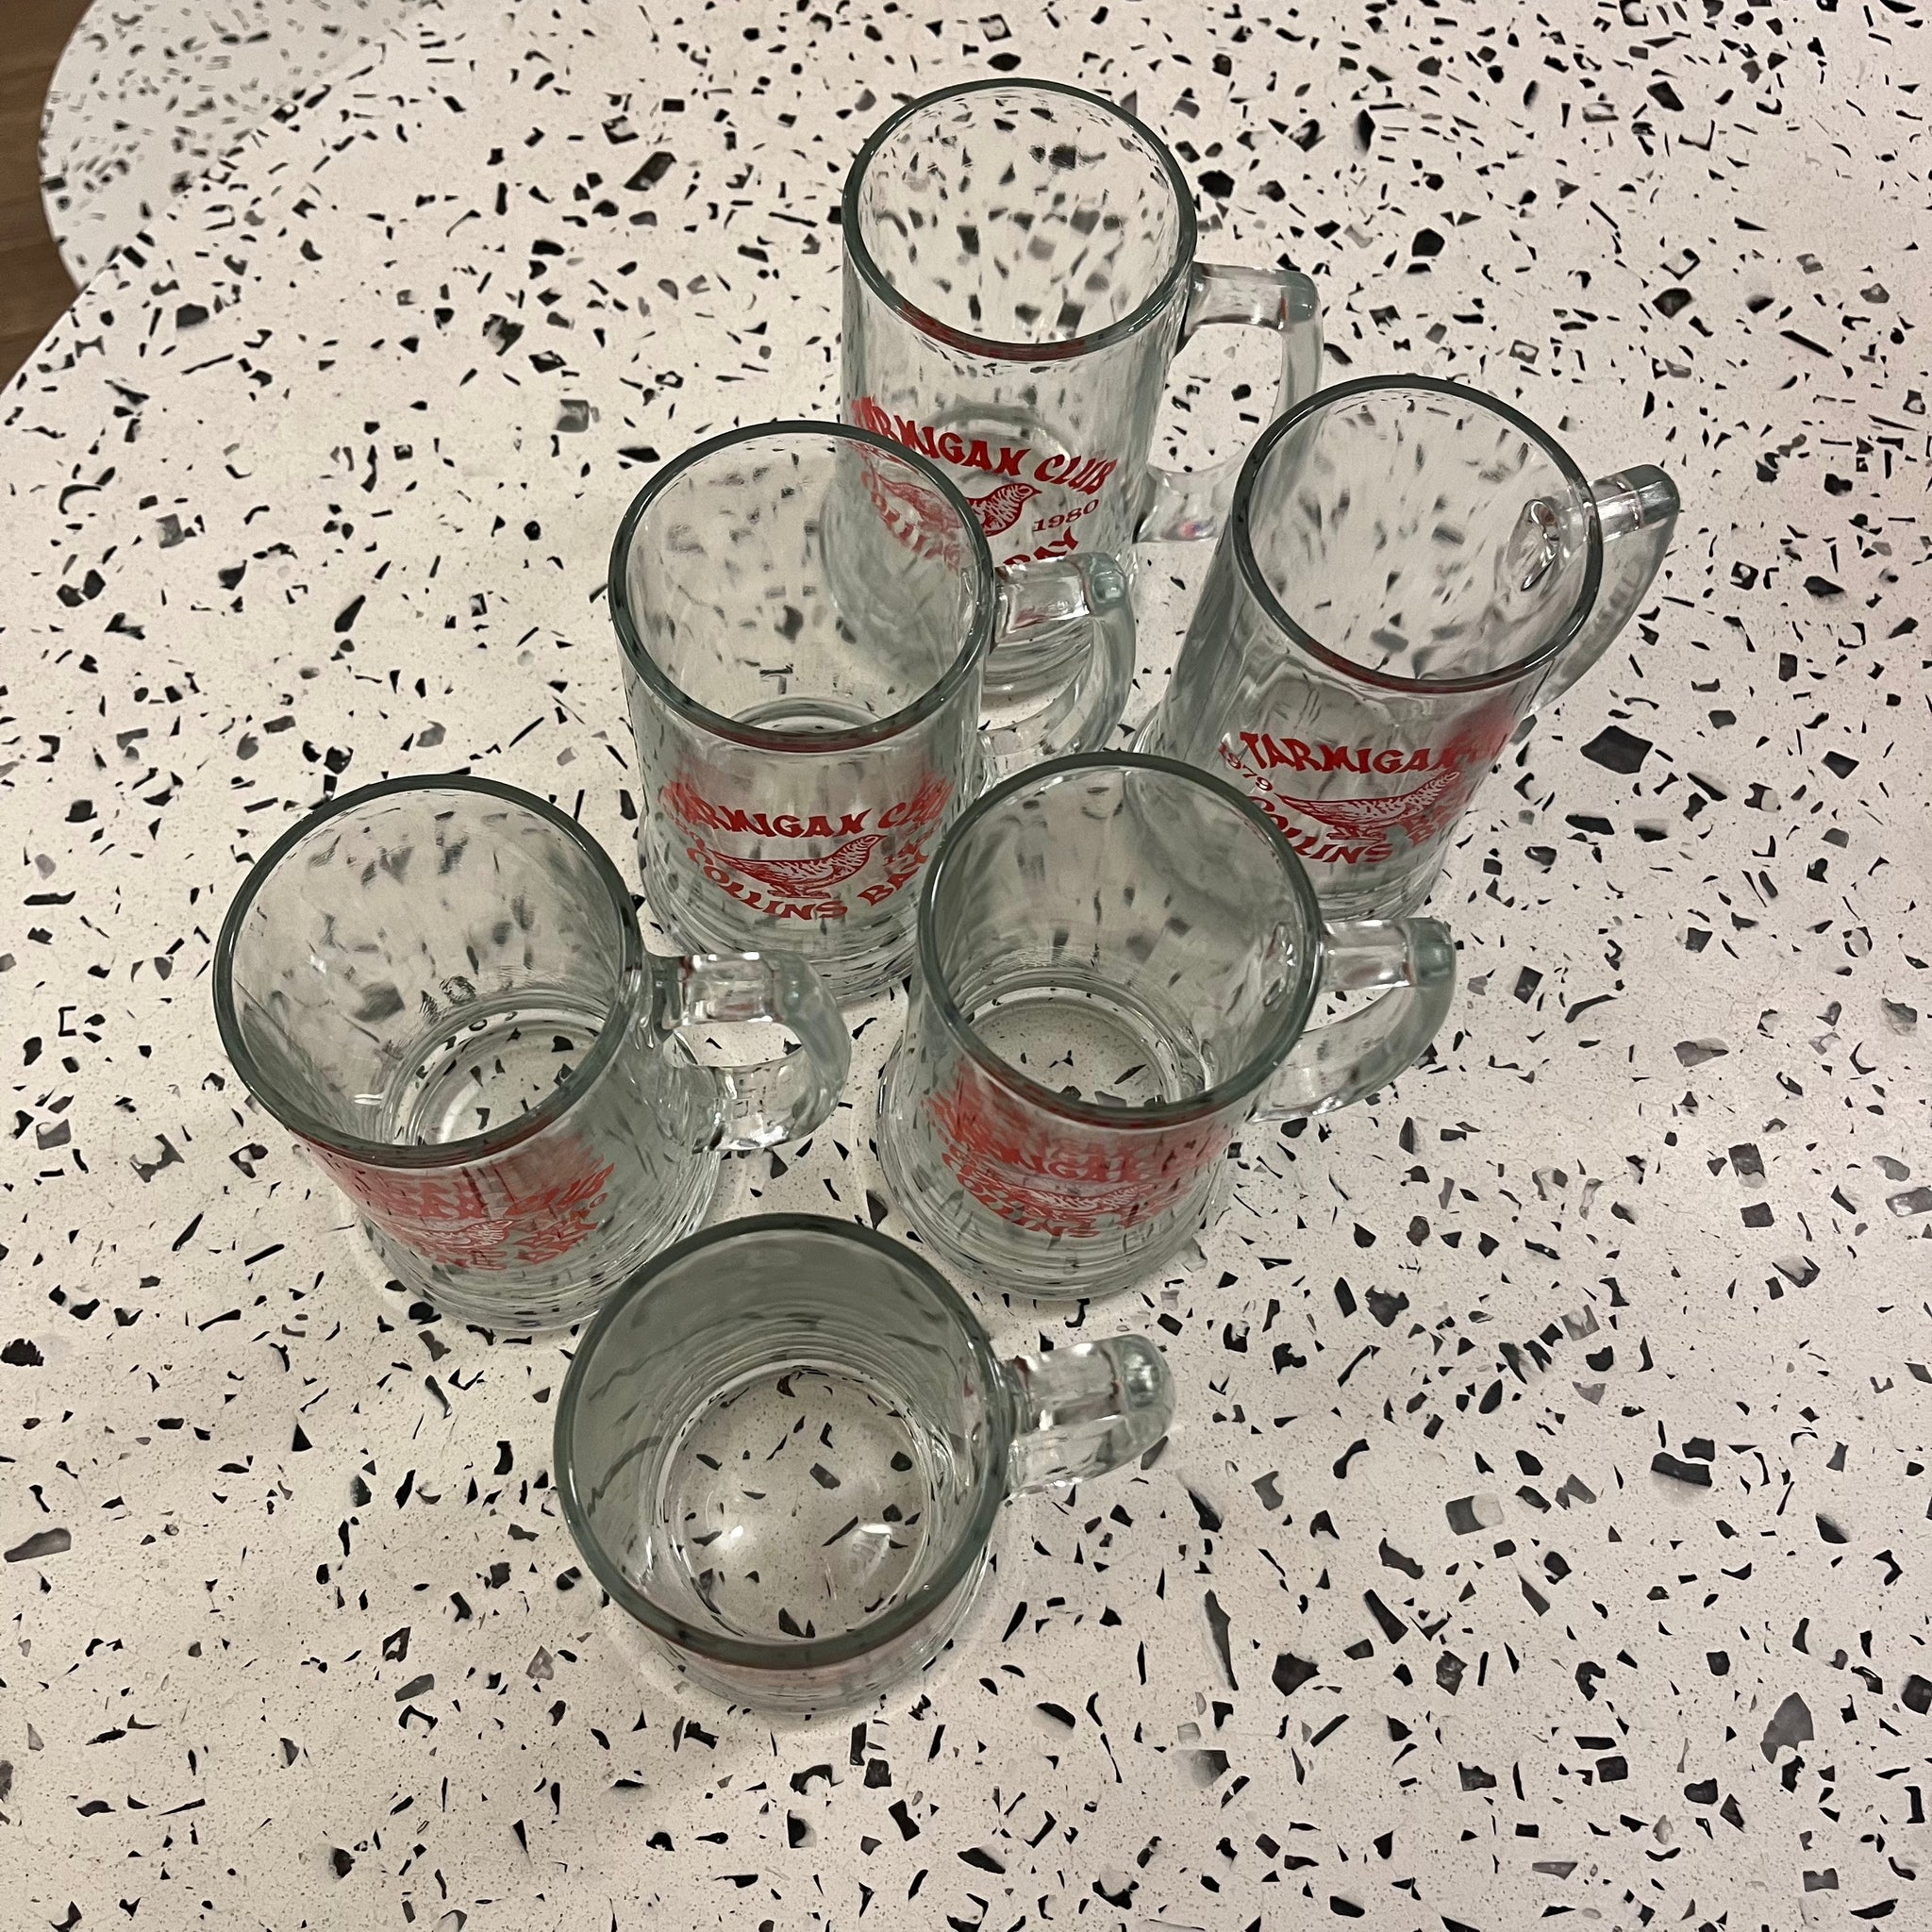 Tarmigan Club Glass Beer Mugs - Set of 6